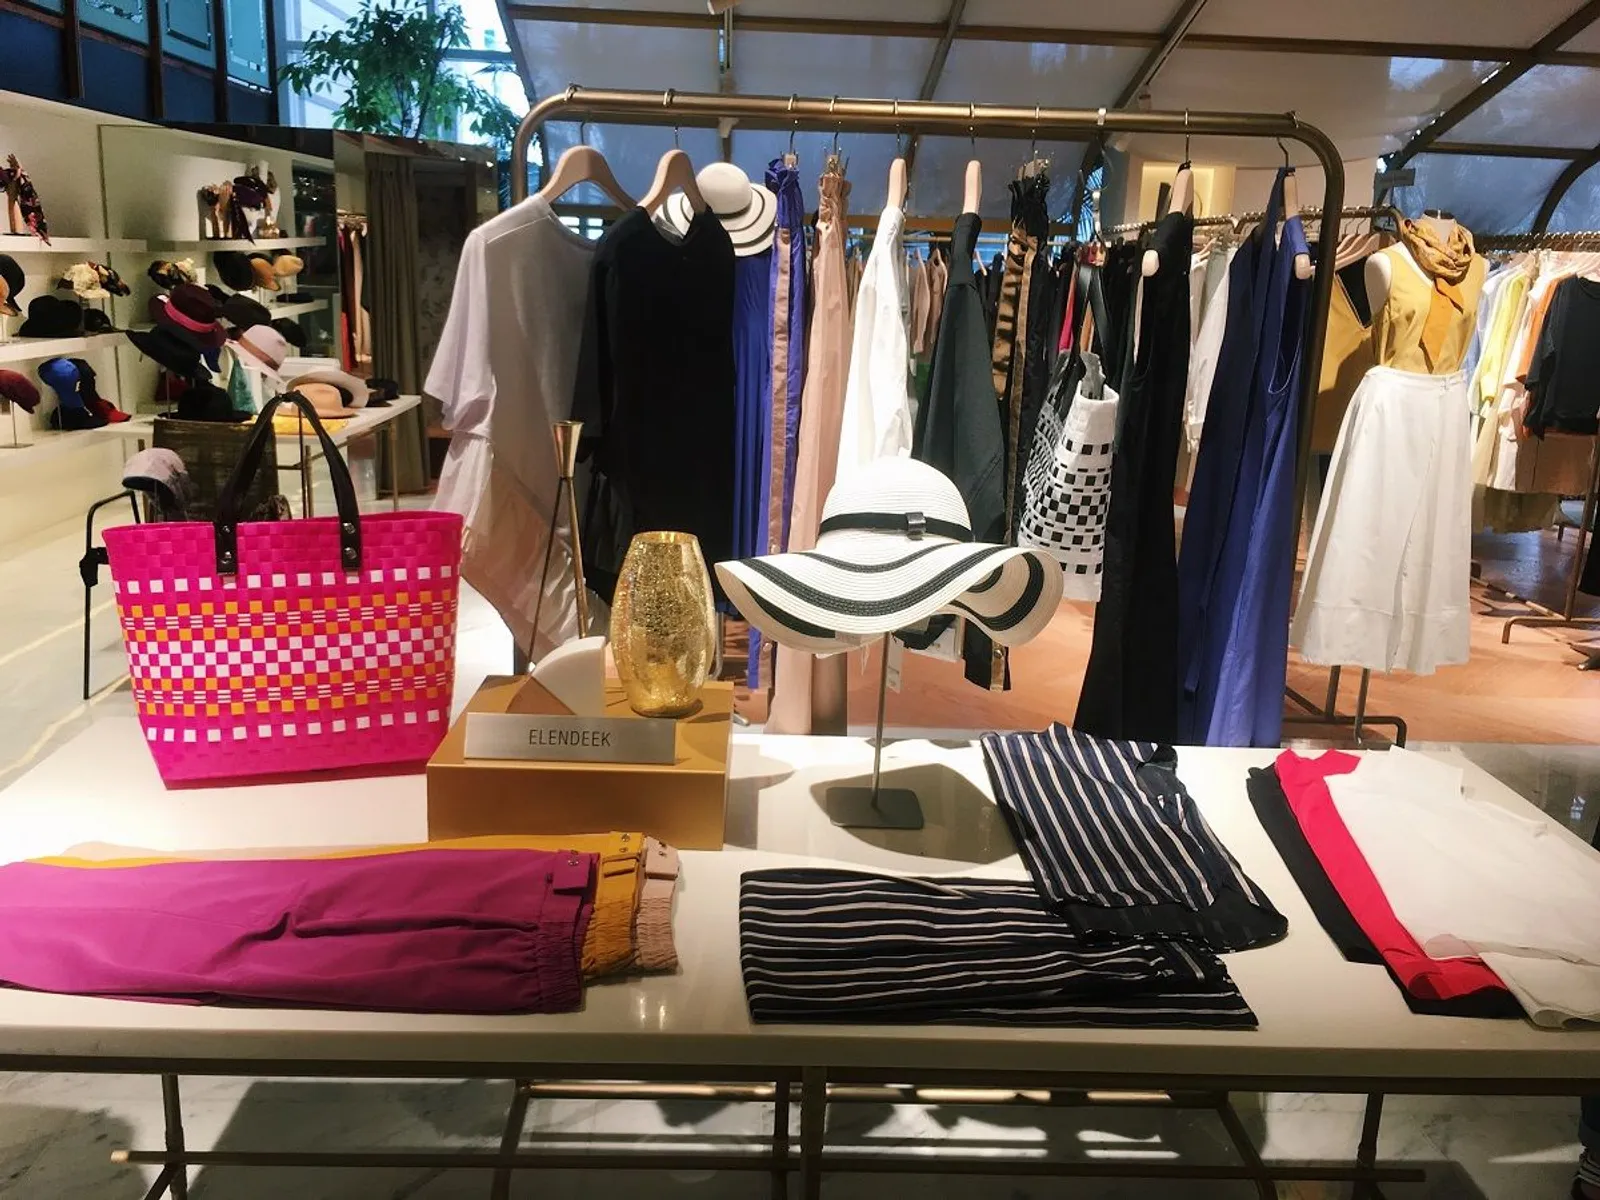 Hadir di Jakarta, Gerai Fashion Lumine Hadirkan 20 Brand Asal Jepang